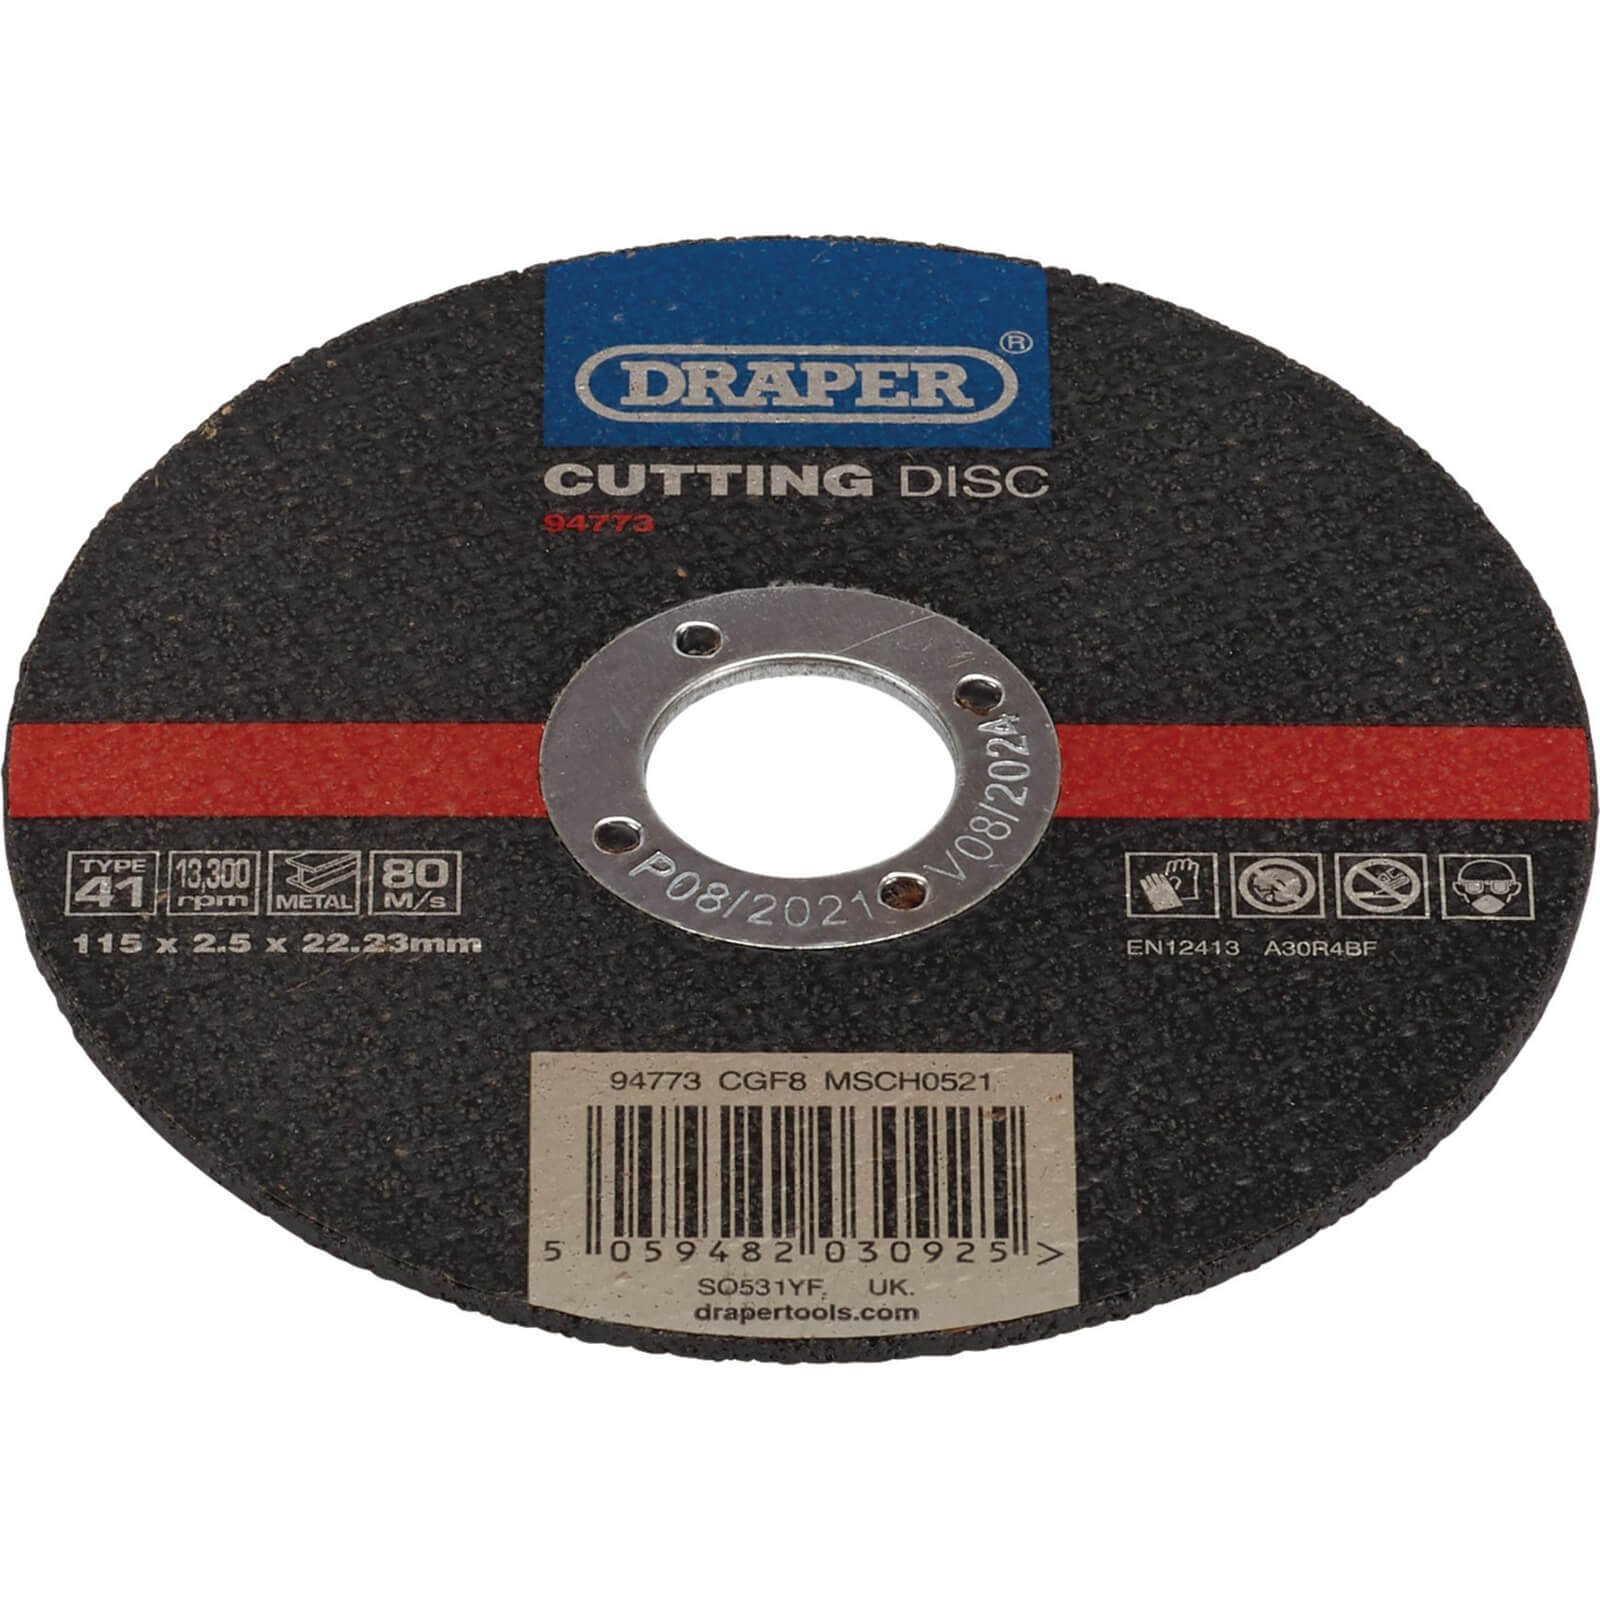 Image of Draper Metal Cutting Disc 125mm 2.5mm 22mm